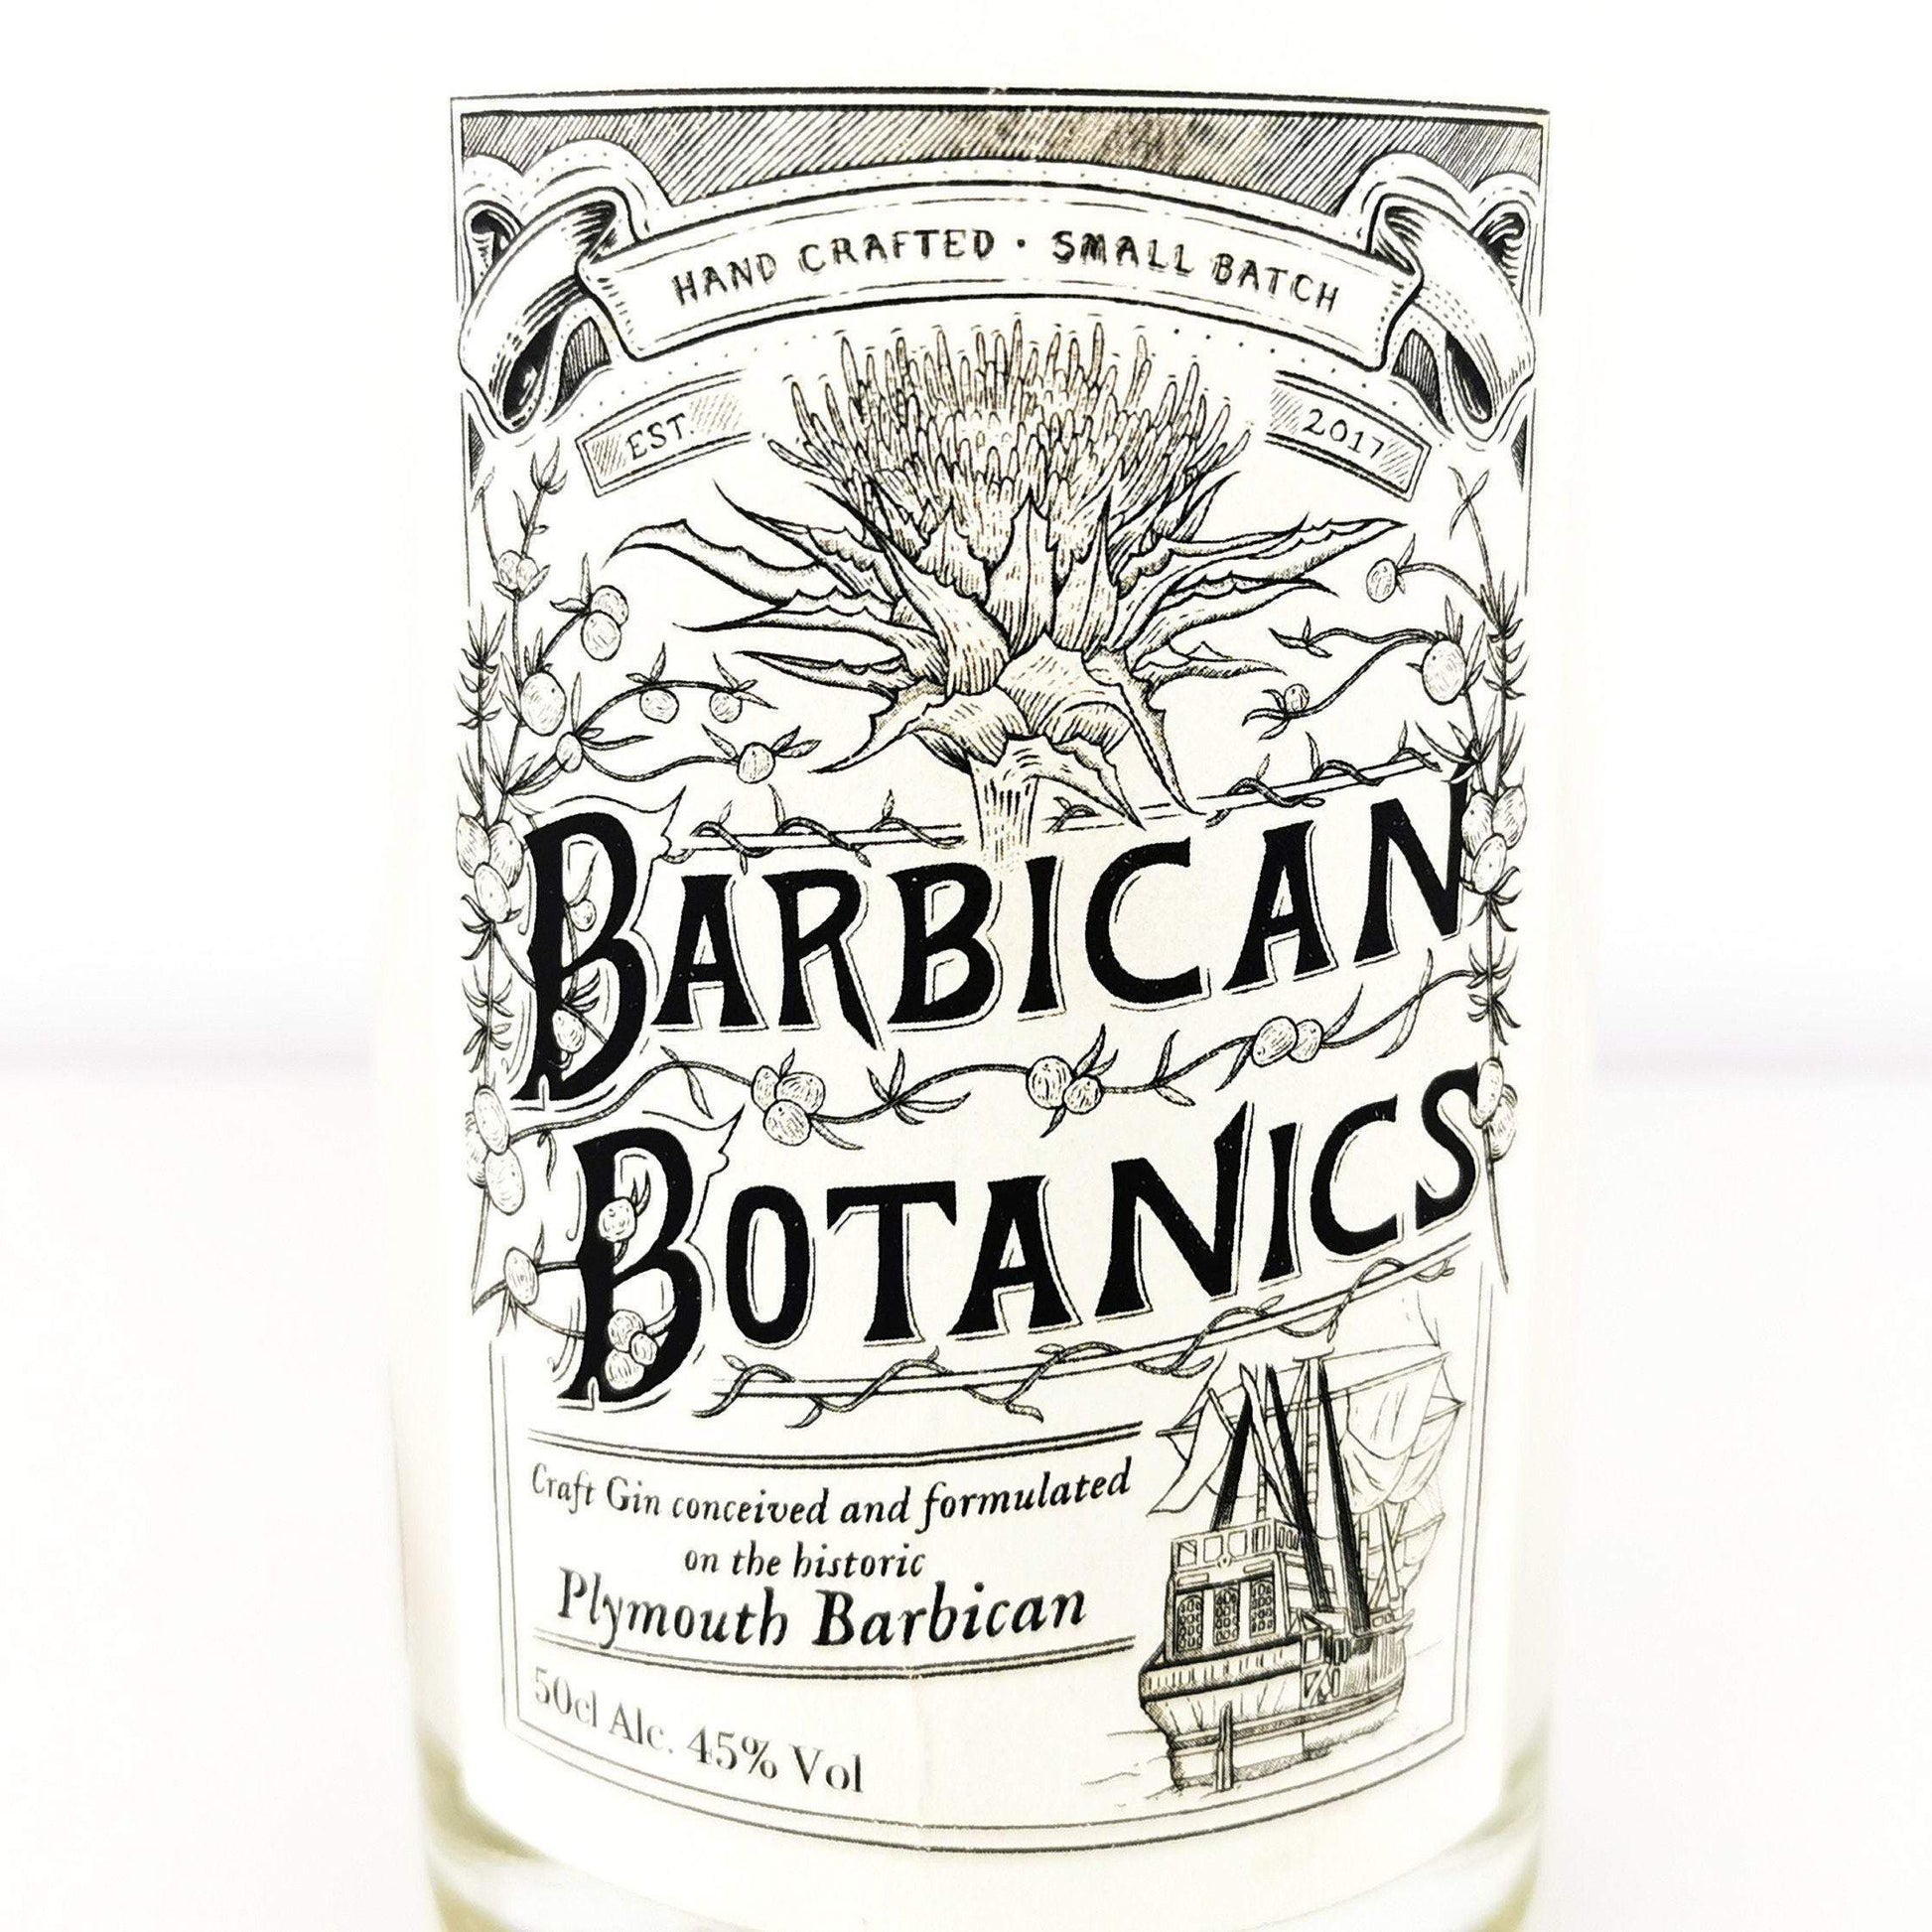 Barbican Botanics Gin Bottle Candle Gin Bottle Candles Adhock Homeware